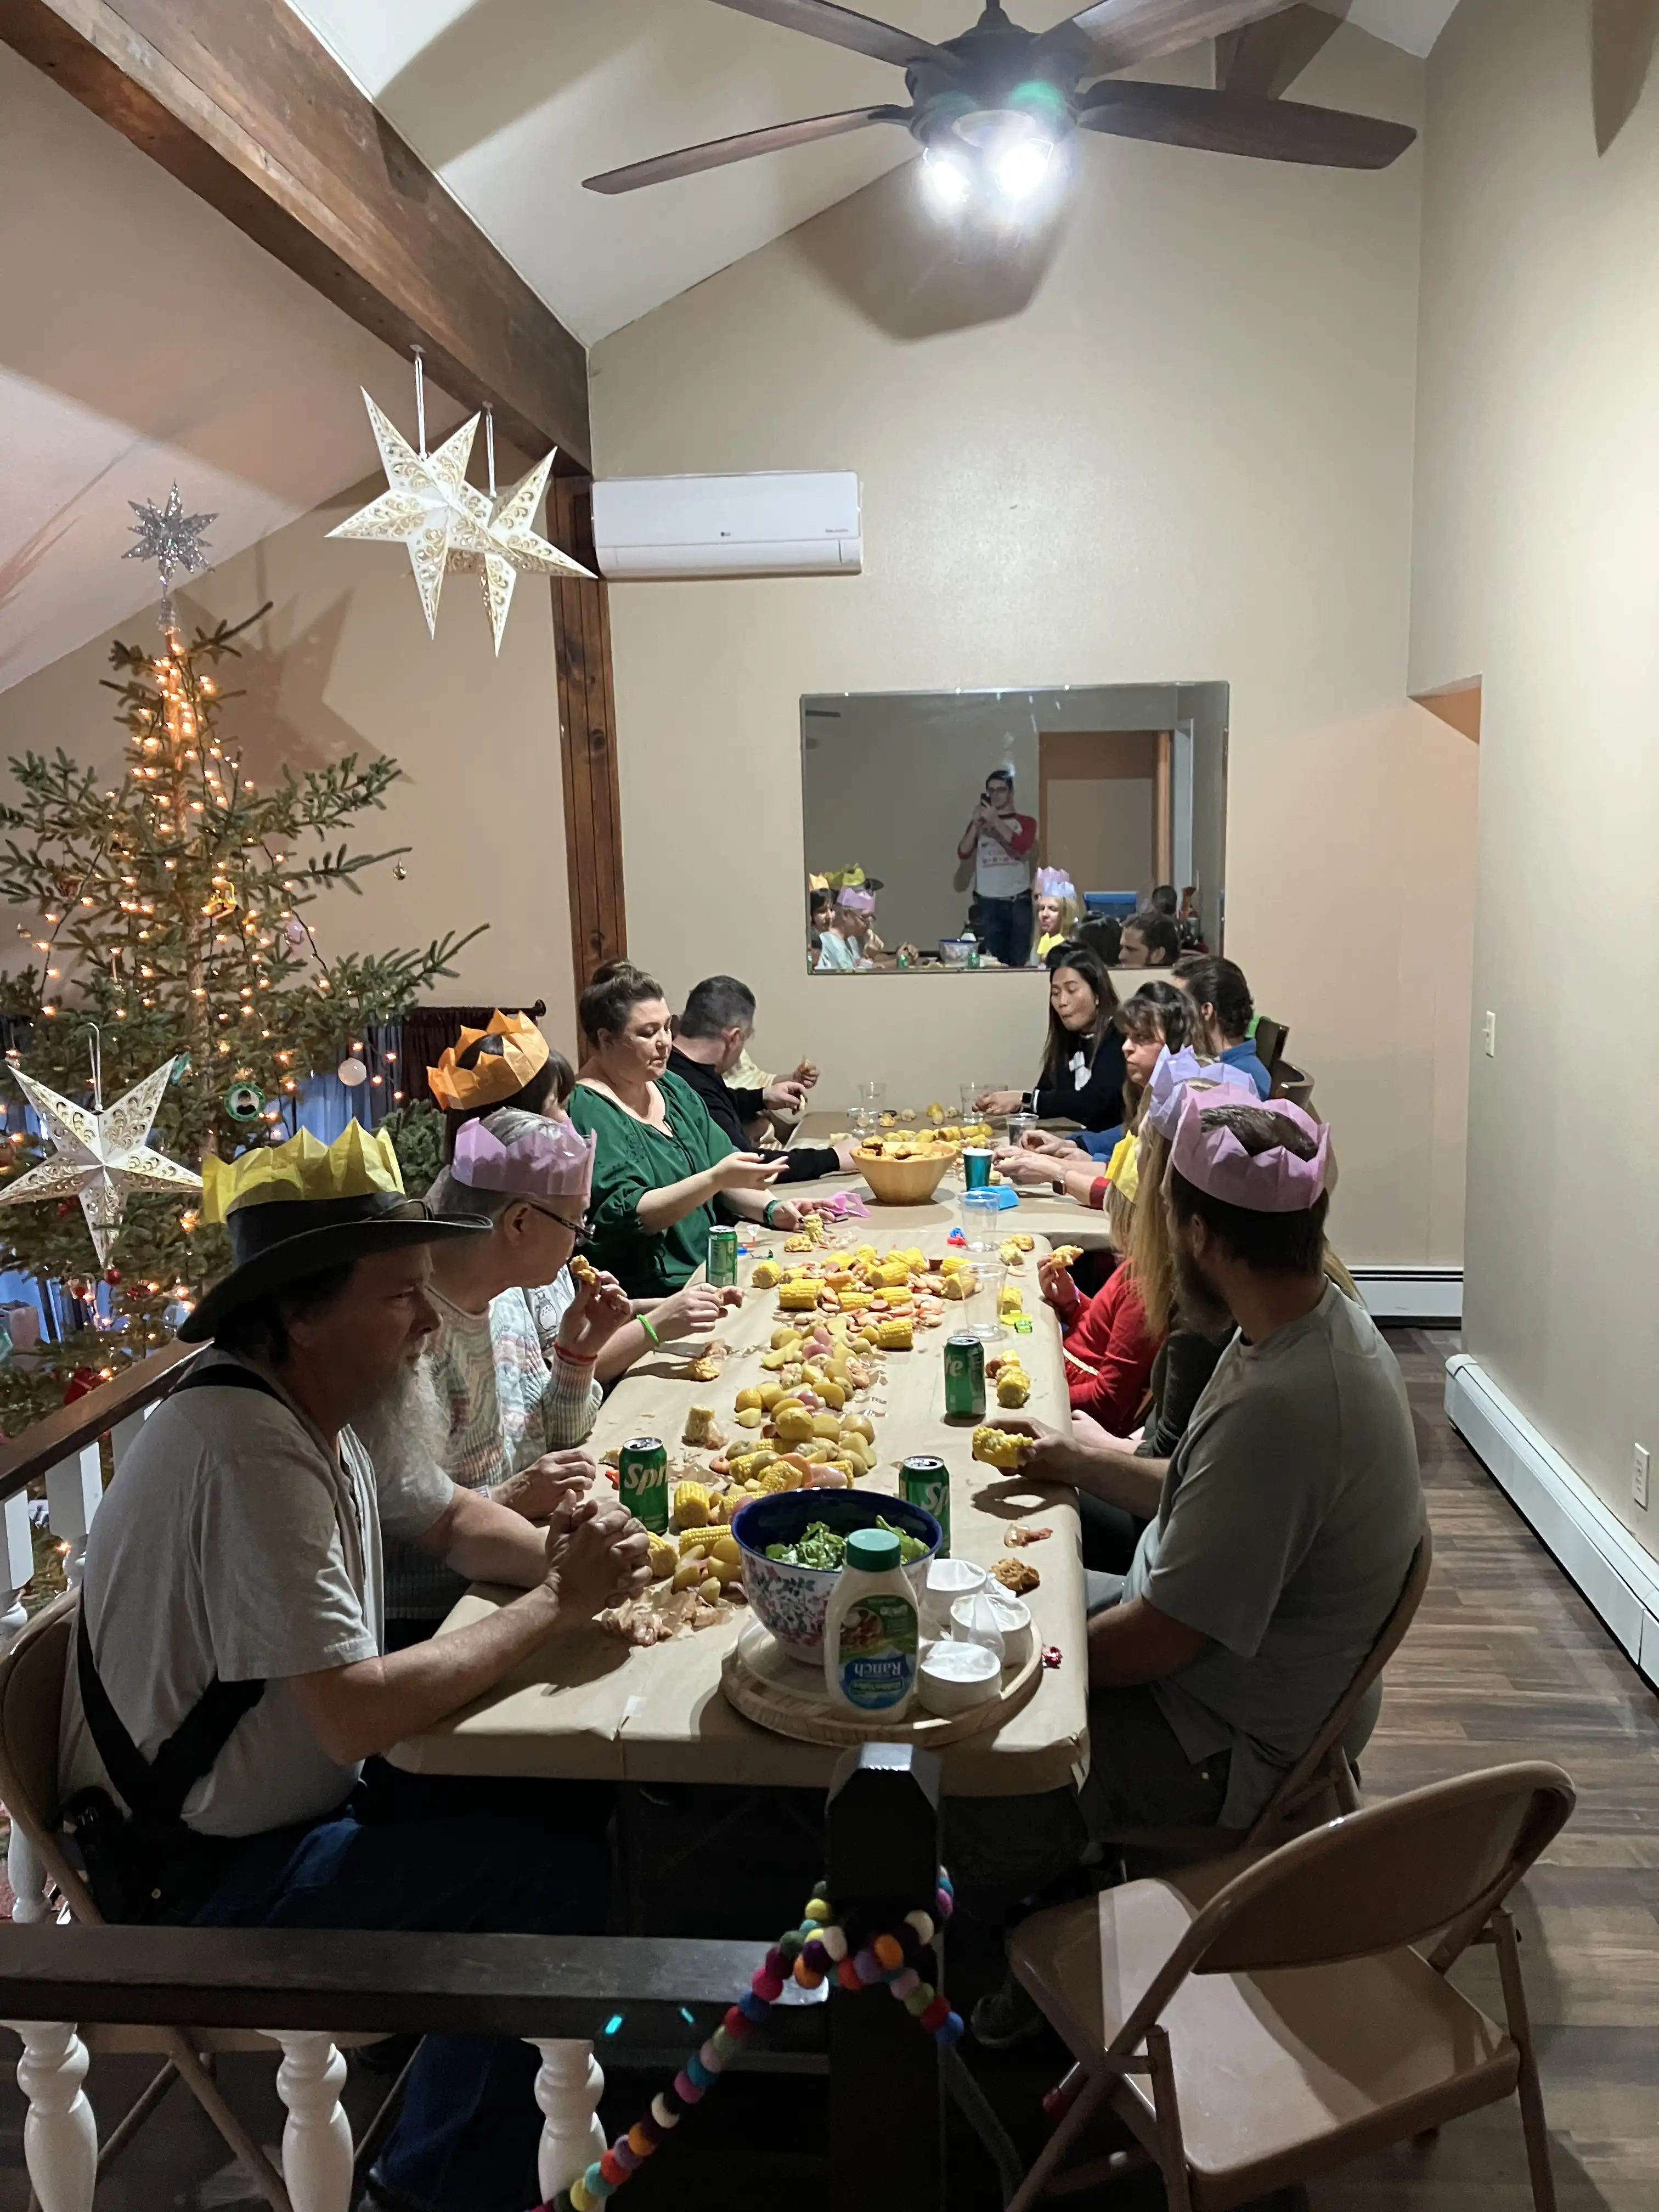 Everyone eating Christmas dinner around the table.